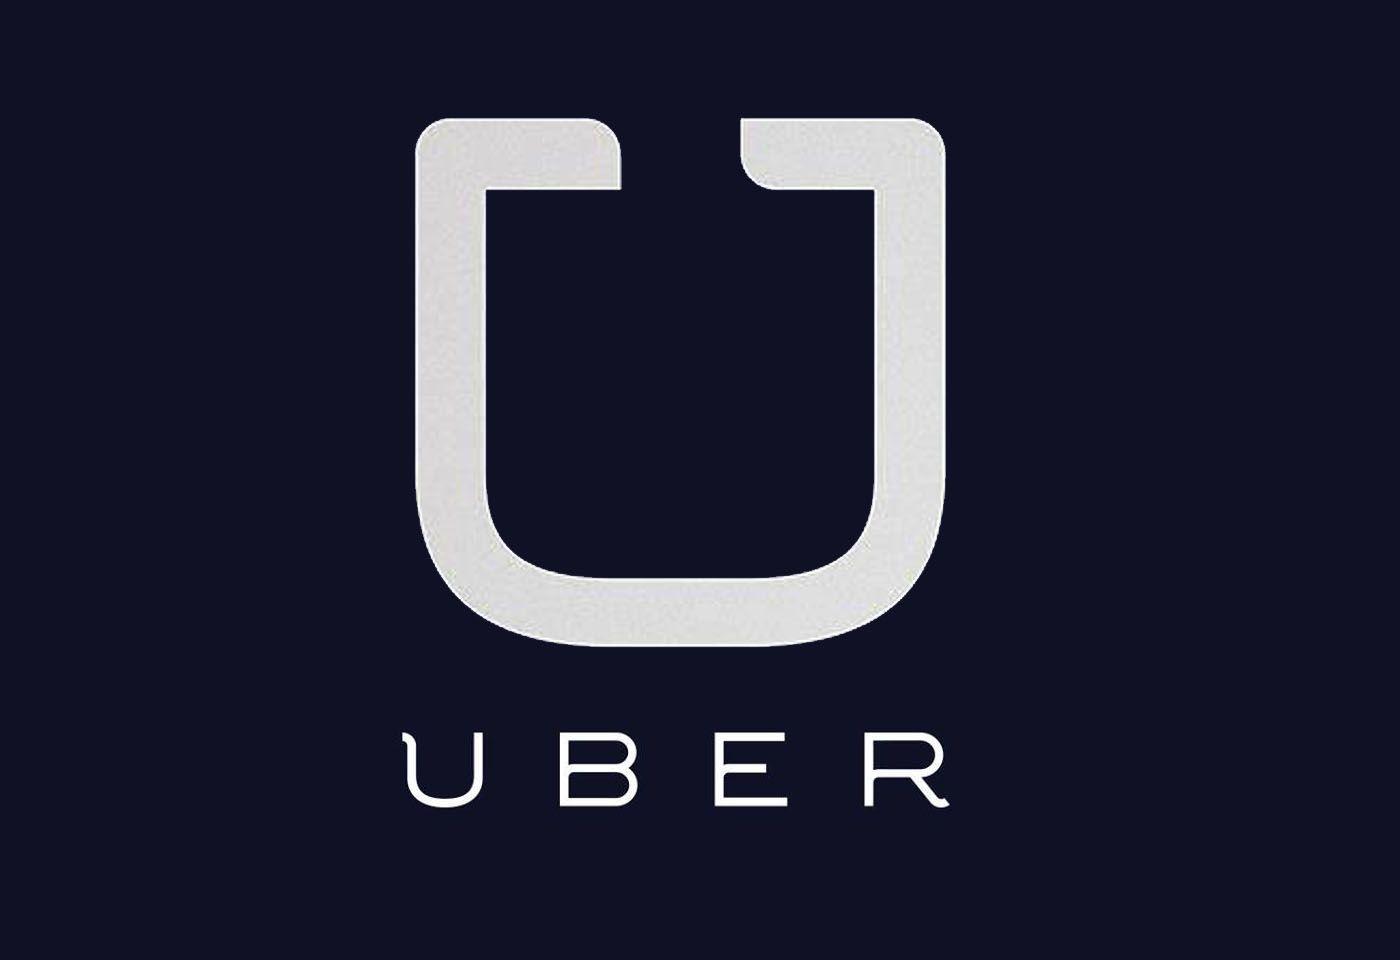 New Printable Uber Airport Logo - Uber old Logos